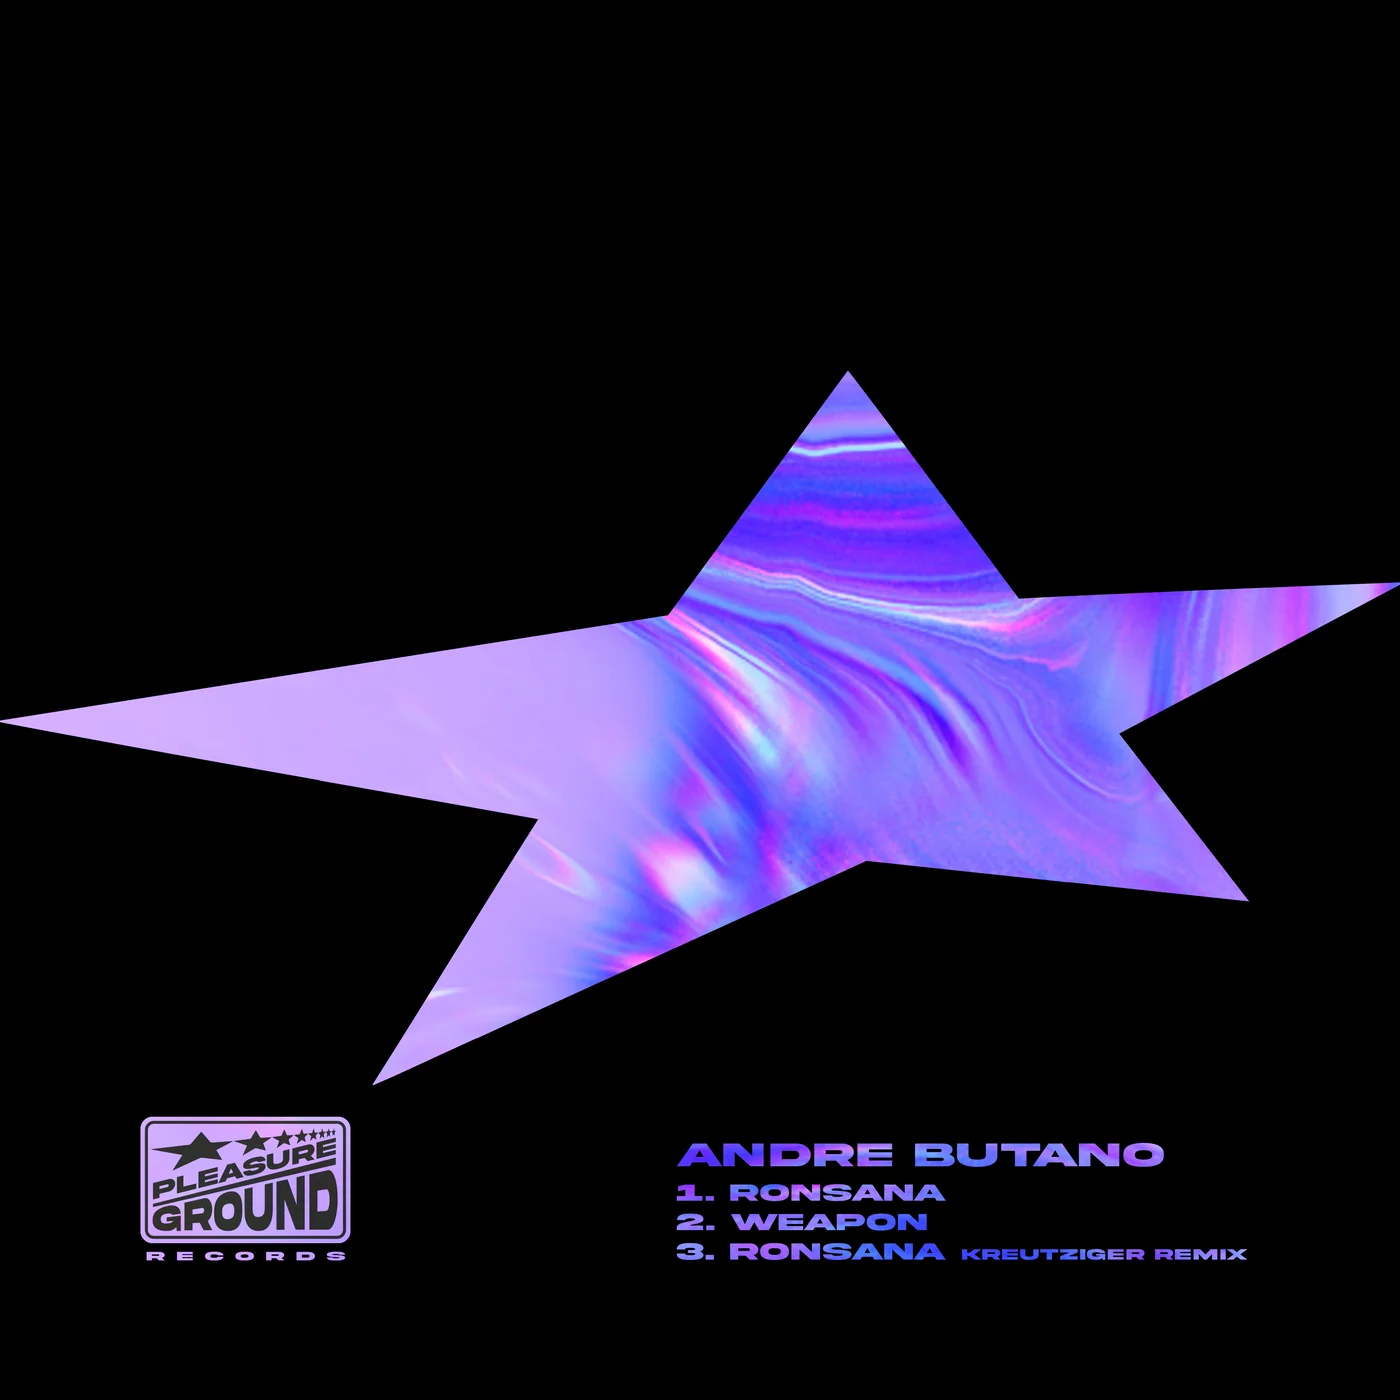 Andre Butano - Weapon (Original Mix)